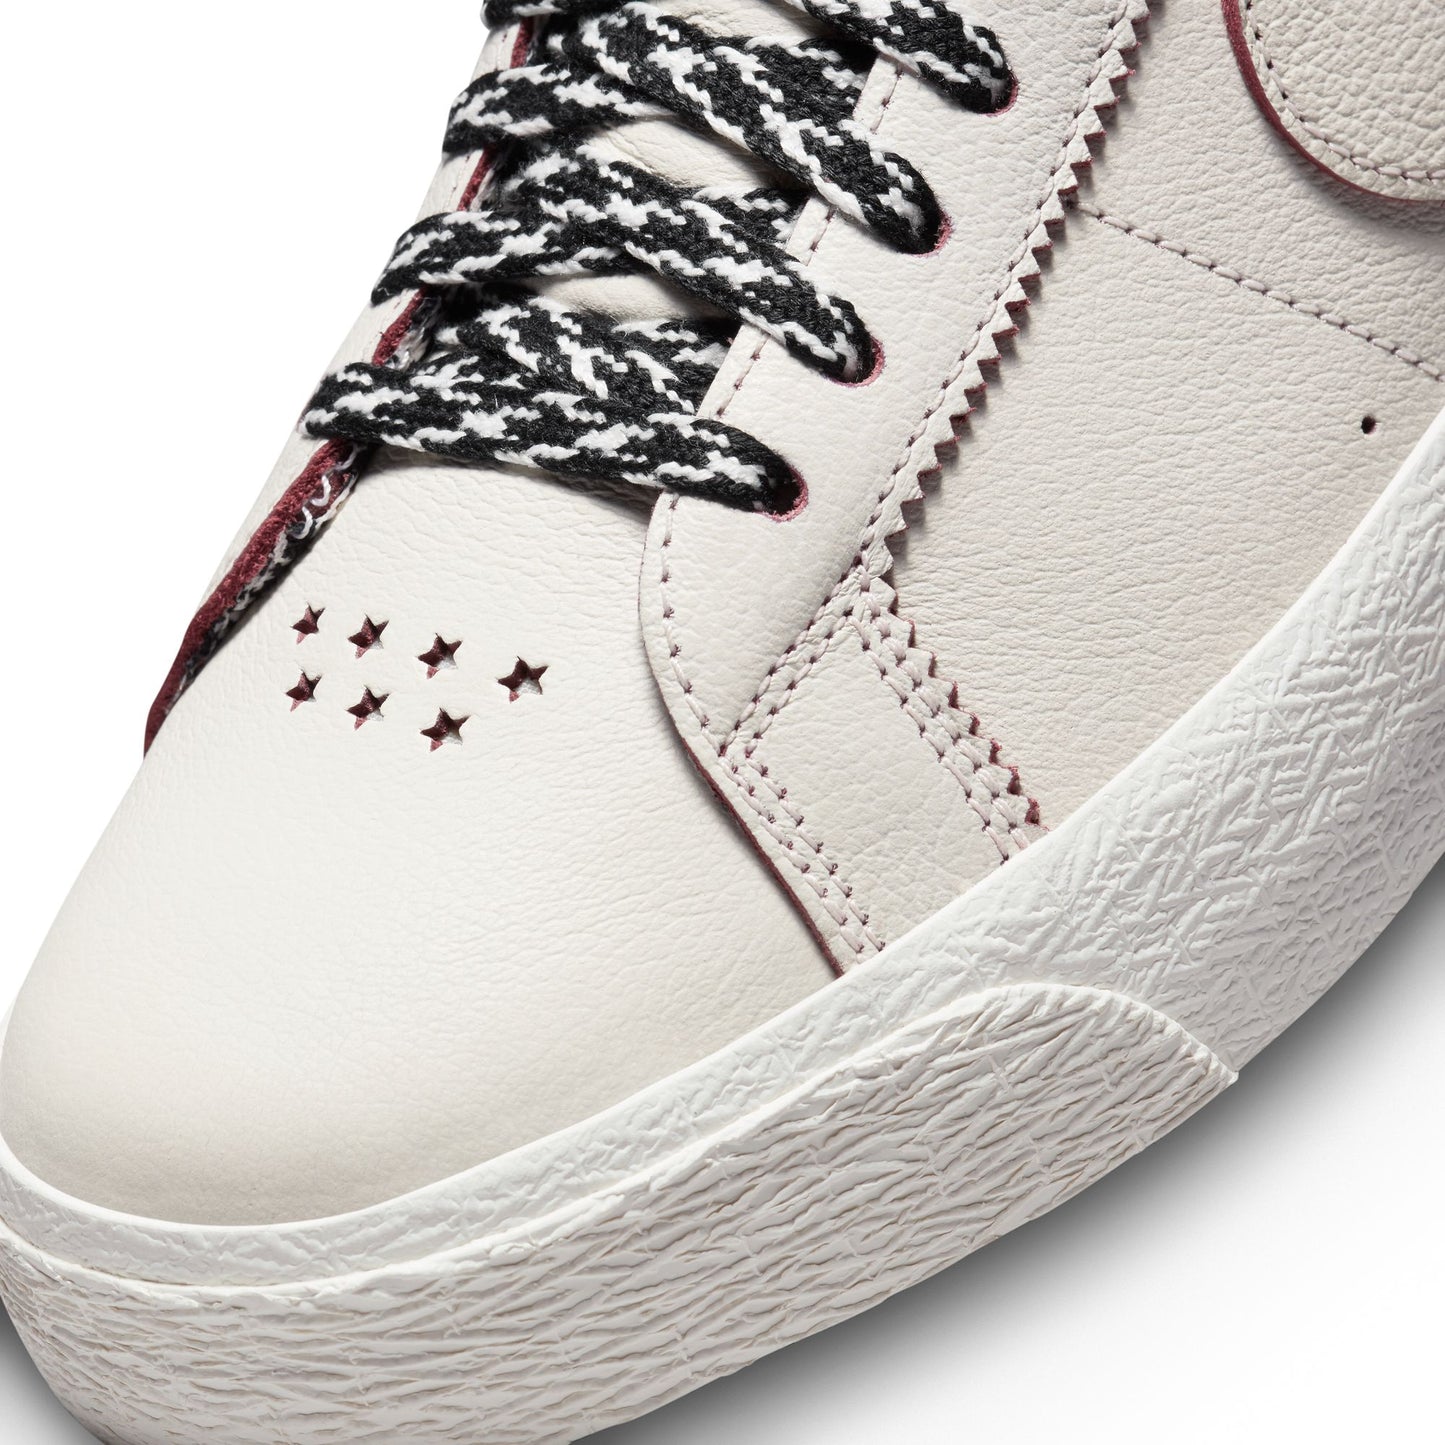 Nike SB Blazer Mid QS Welcome sail dark beetroot white